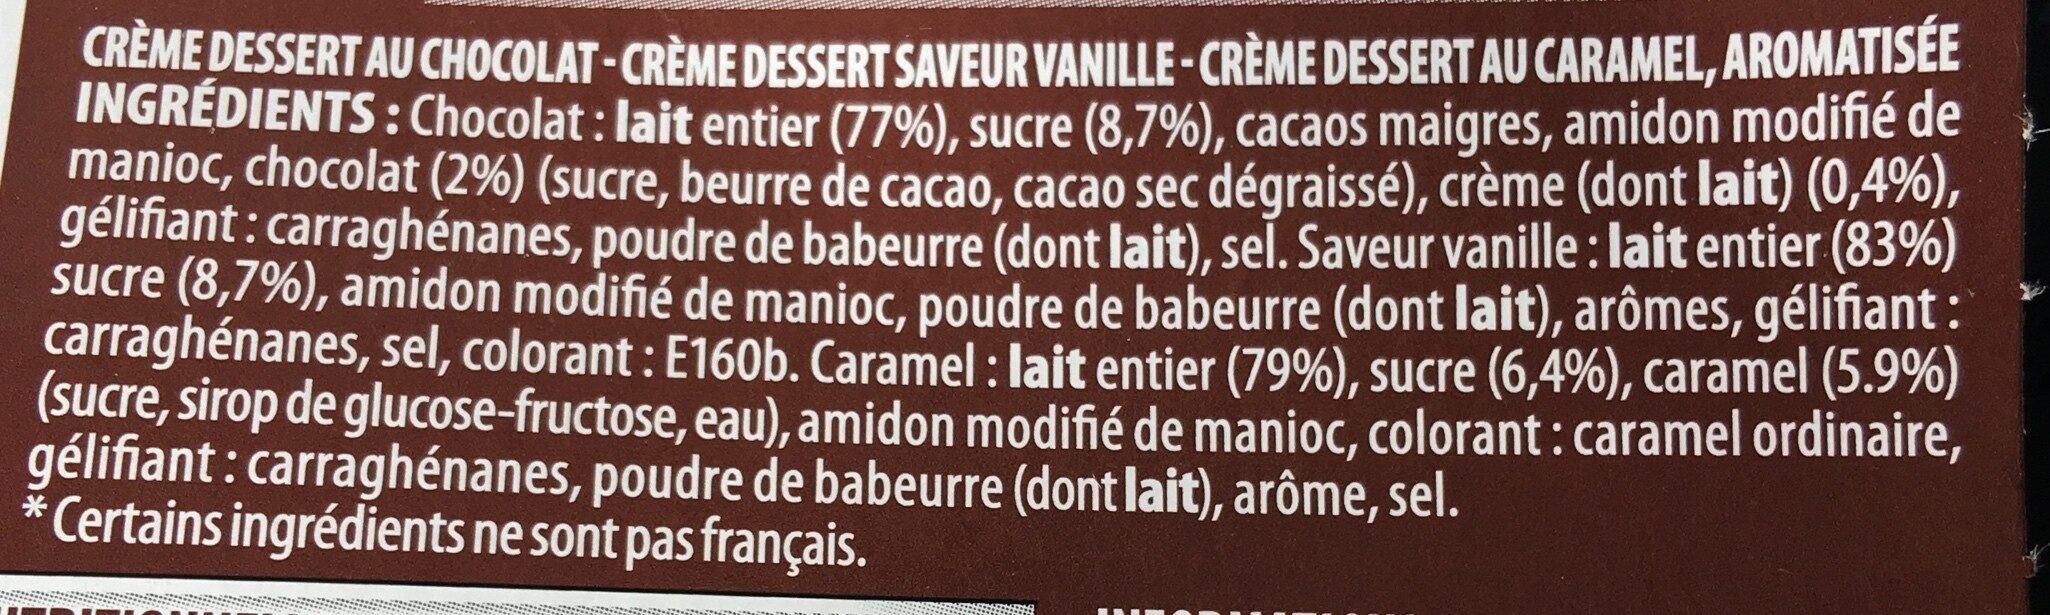 Paturette 4 chocolat 4 caramel 4 saveur vanille - Ingredients - fr